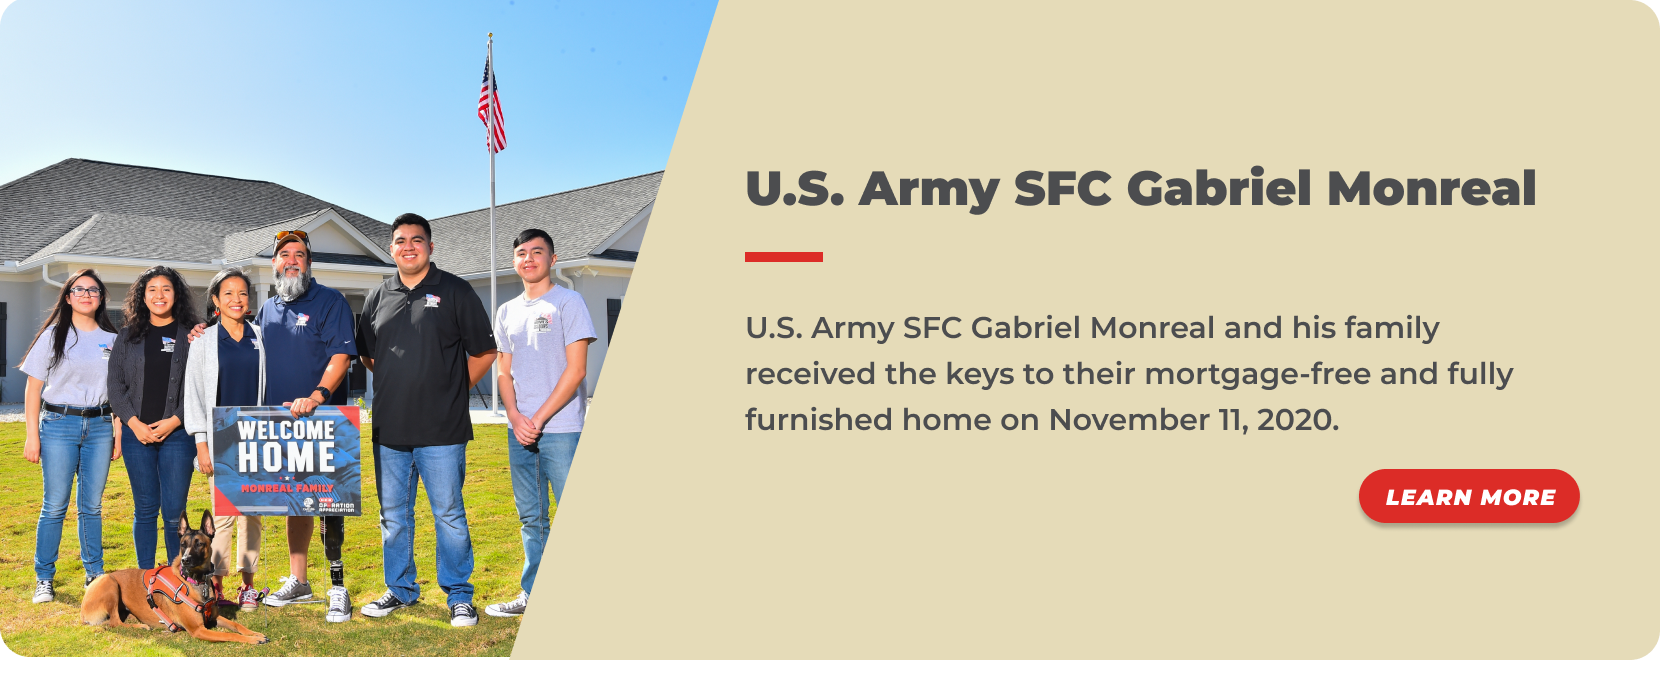 30 - U.S. Army SFC Gabriel Monreal